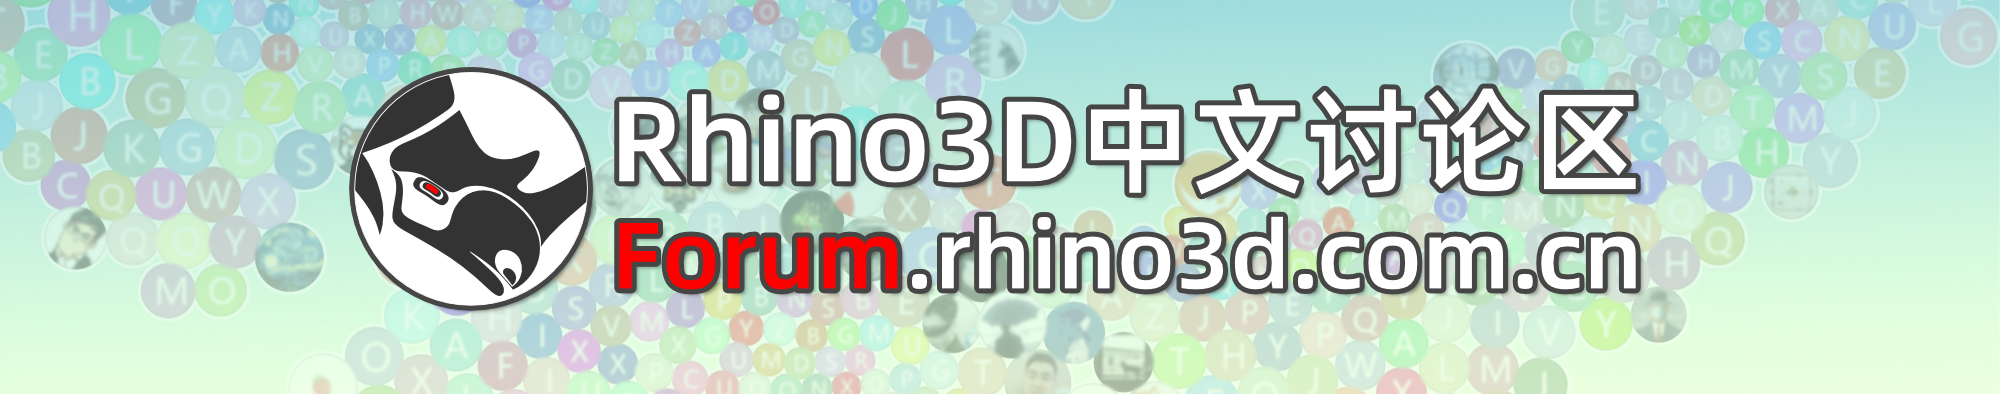 Rhino3D中文讨论区